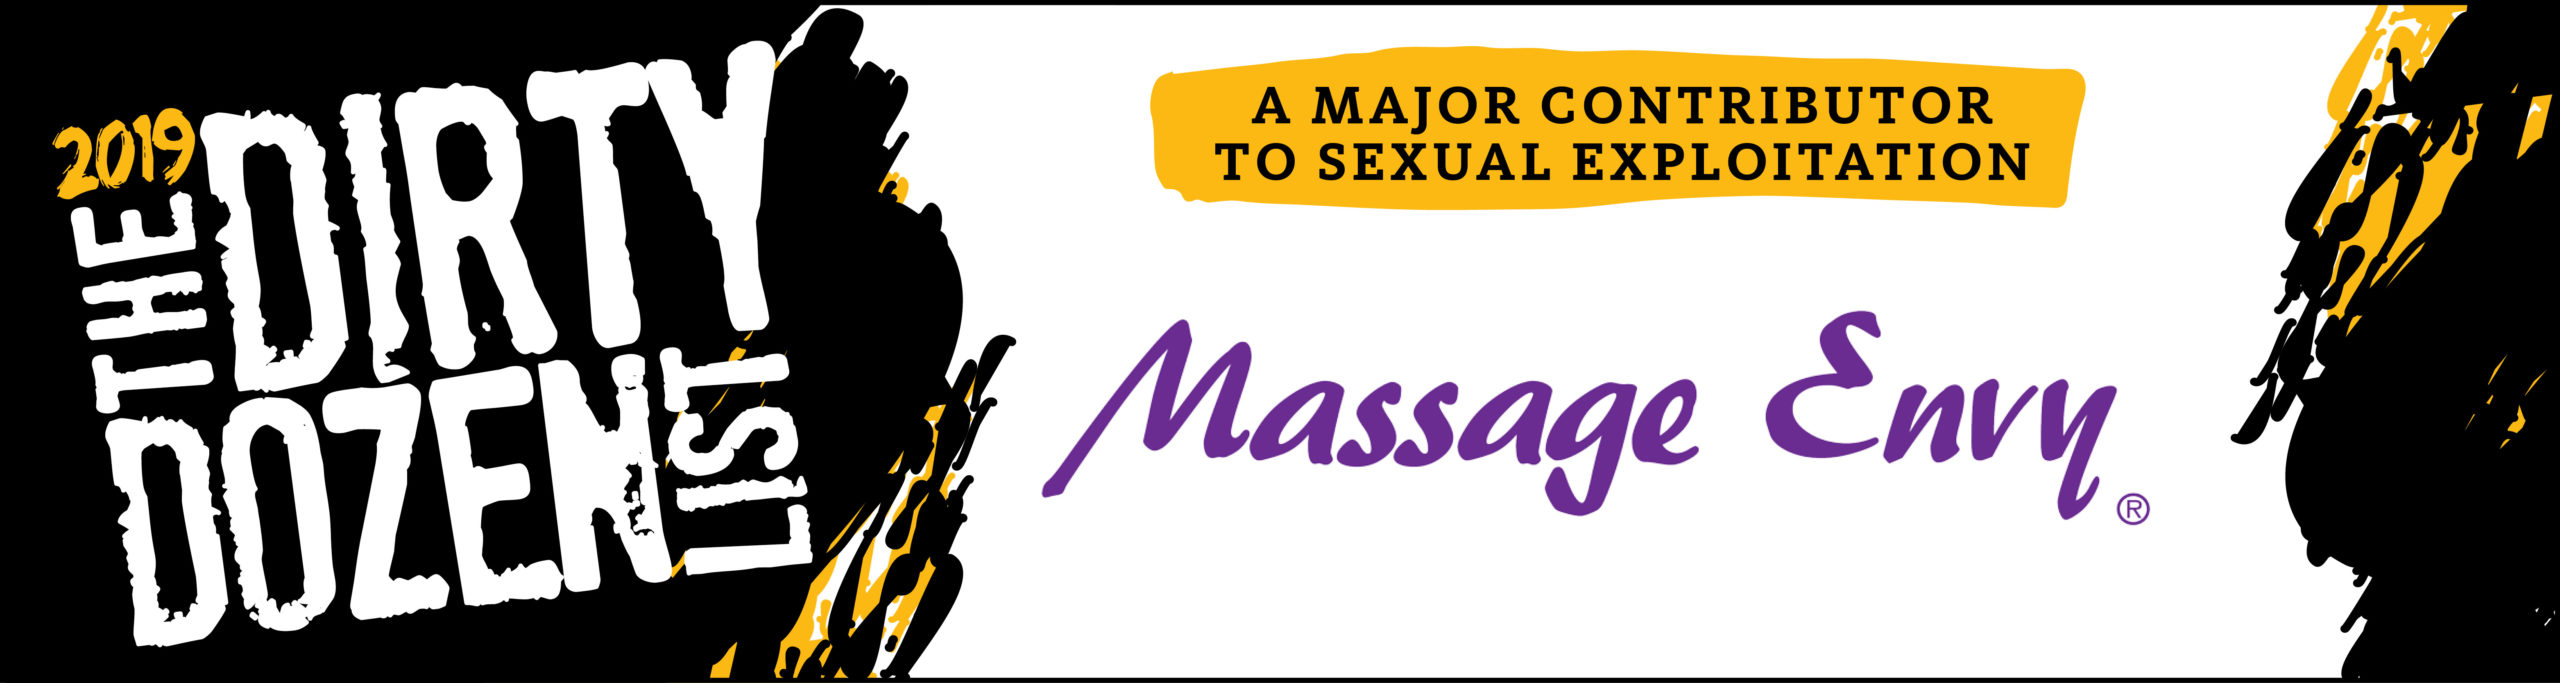 NCOSE's 2019 12 Days of Action: Massage Envy